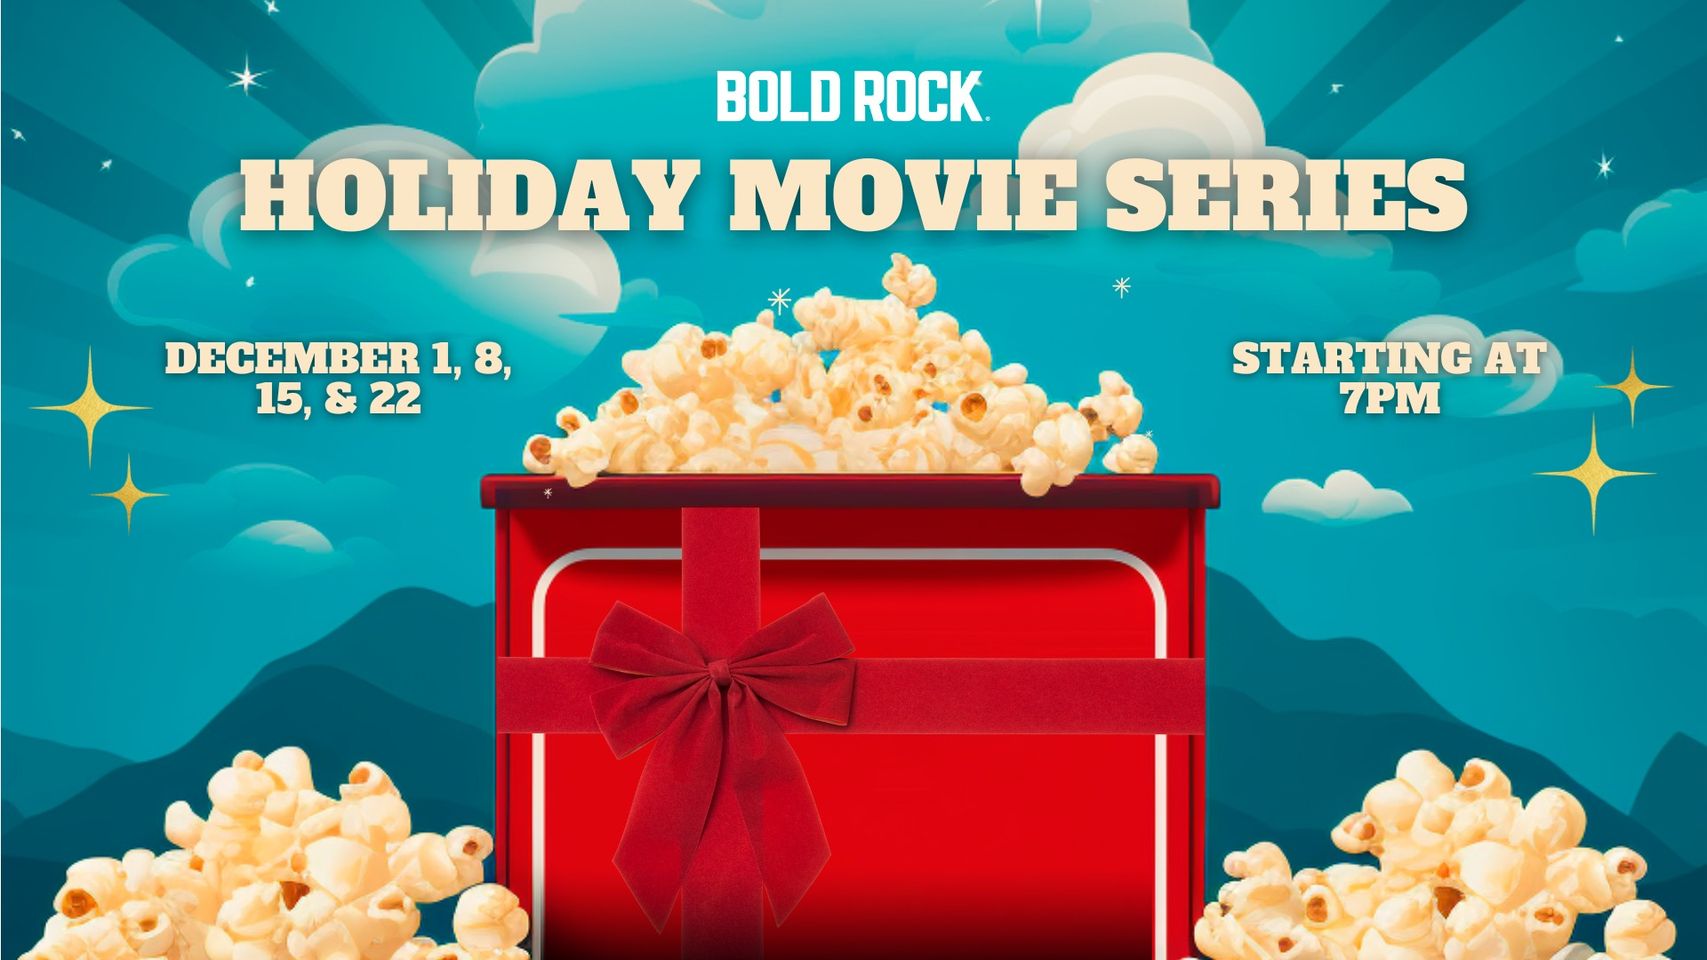 Holiday Movie Series - Bold Rock Hard Cider